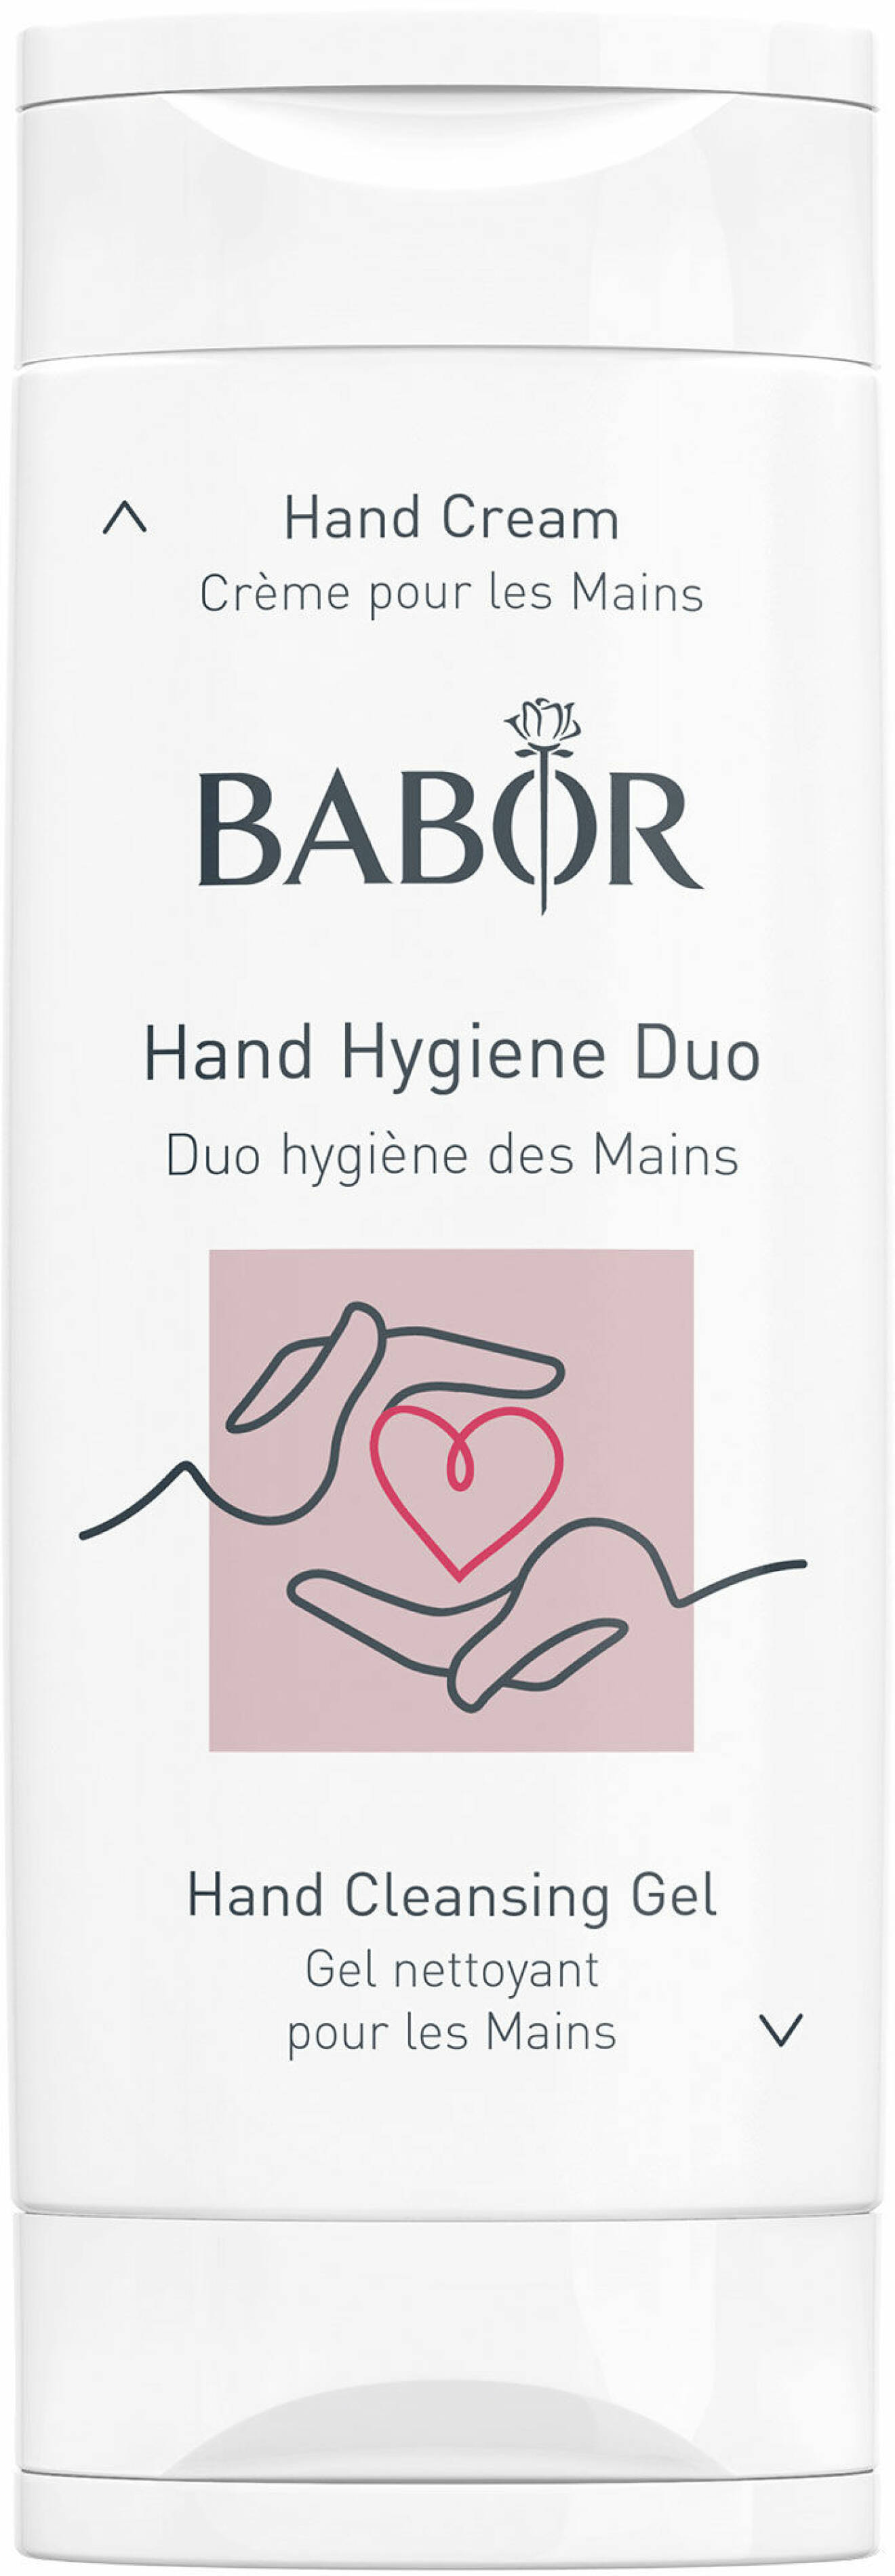 Hand Hygiene Duo, Babor.